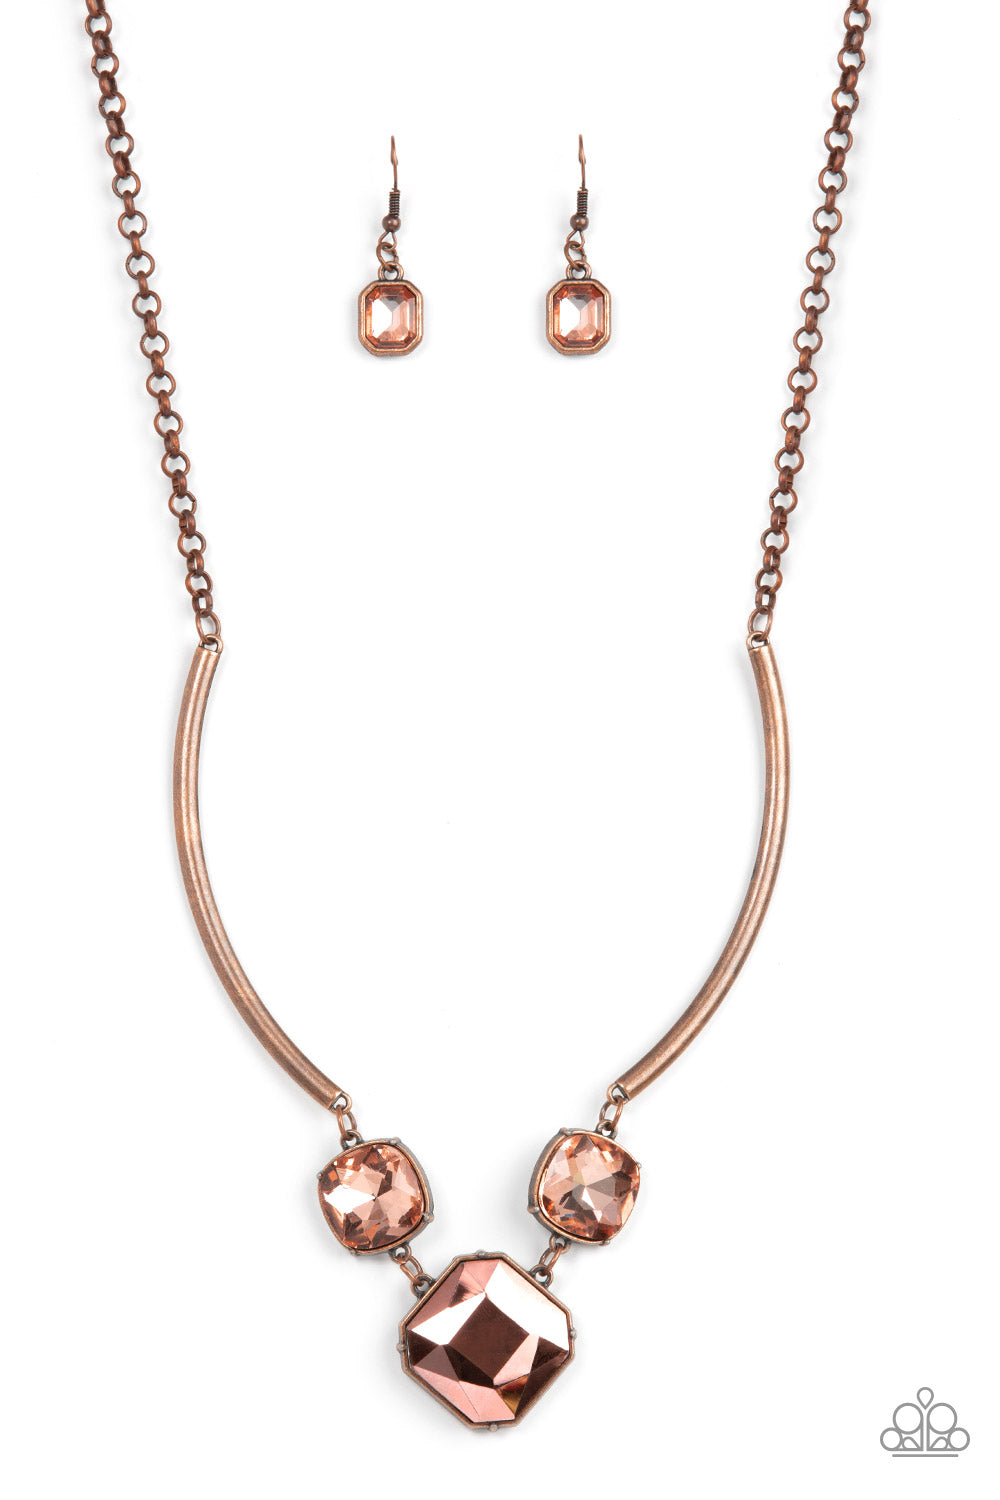 Divine IRIDESCENCE Copper Necklace